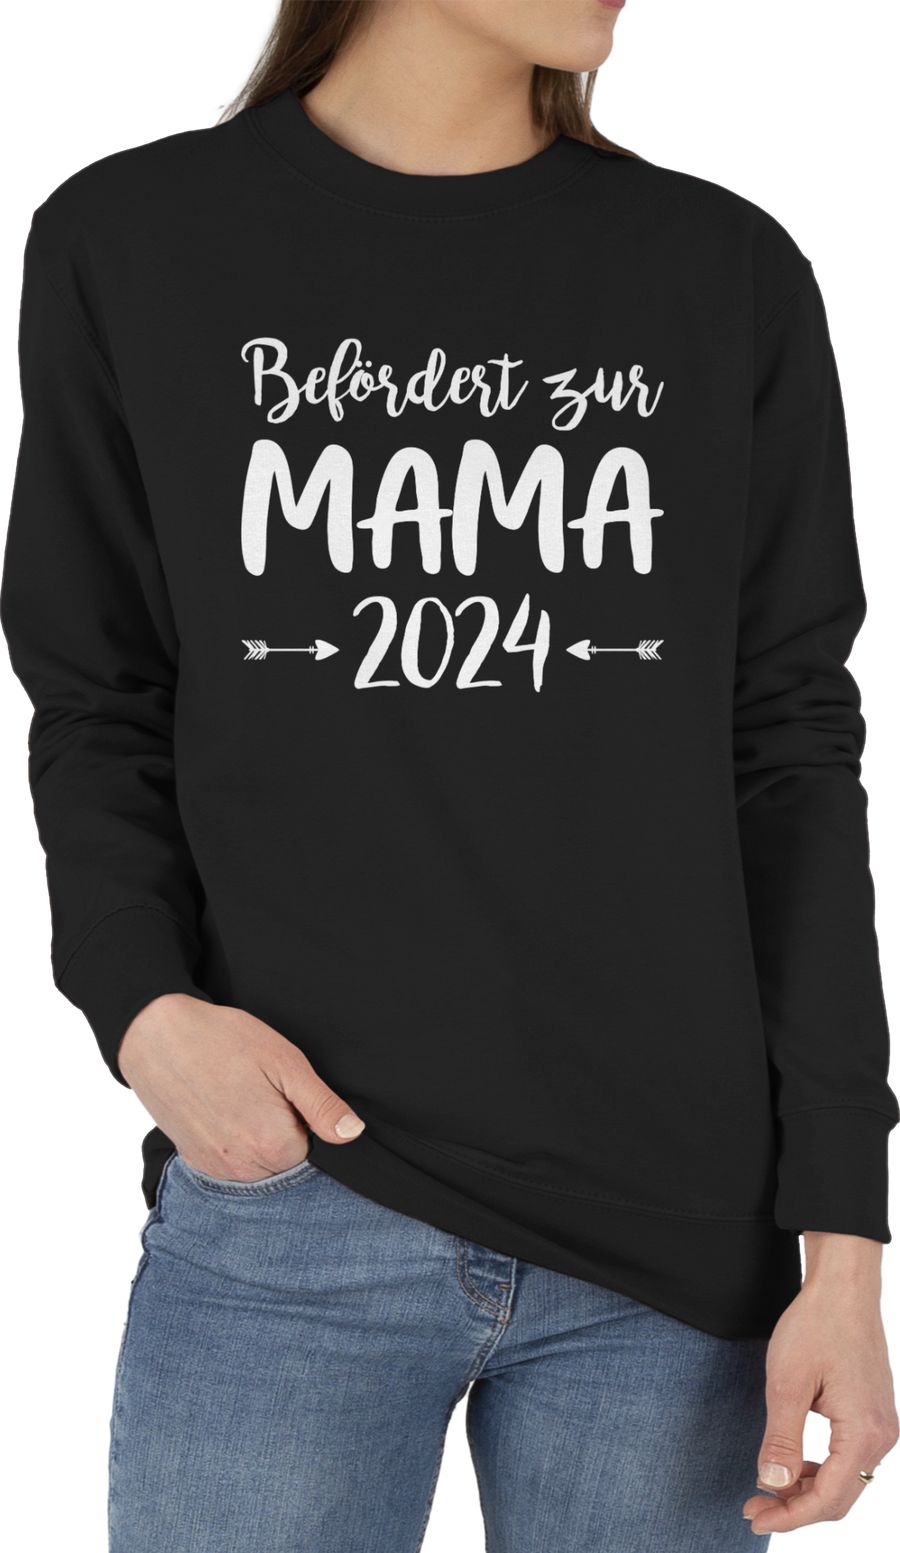 Befördert zur Mama 2024 I Werdende Mutter Geschenk I Geburt